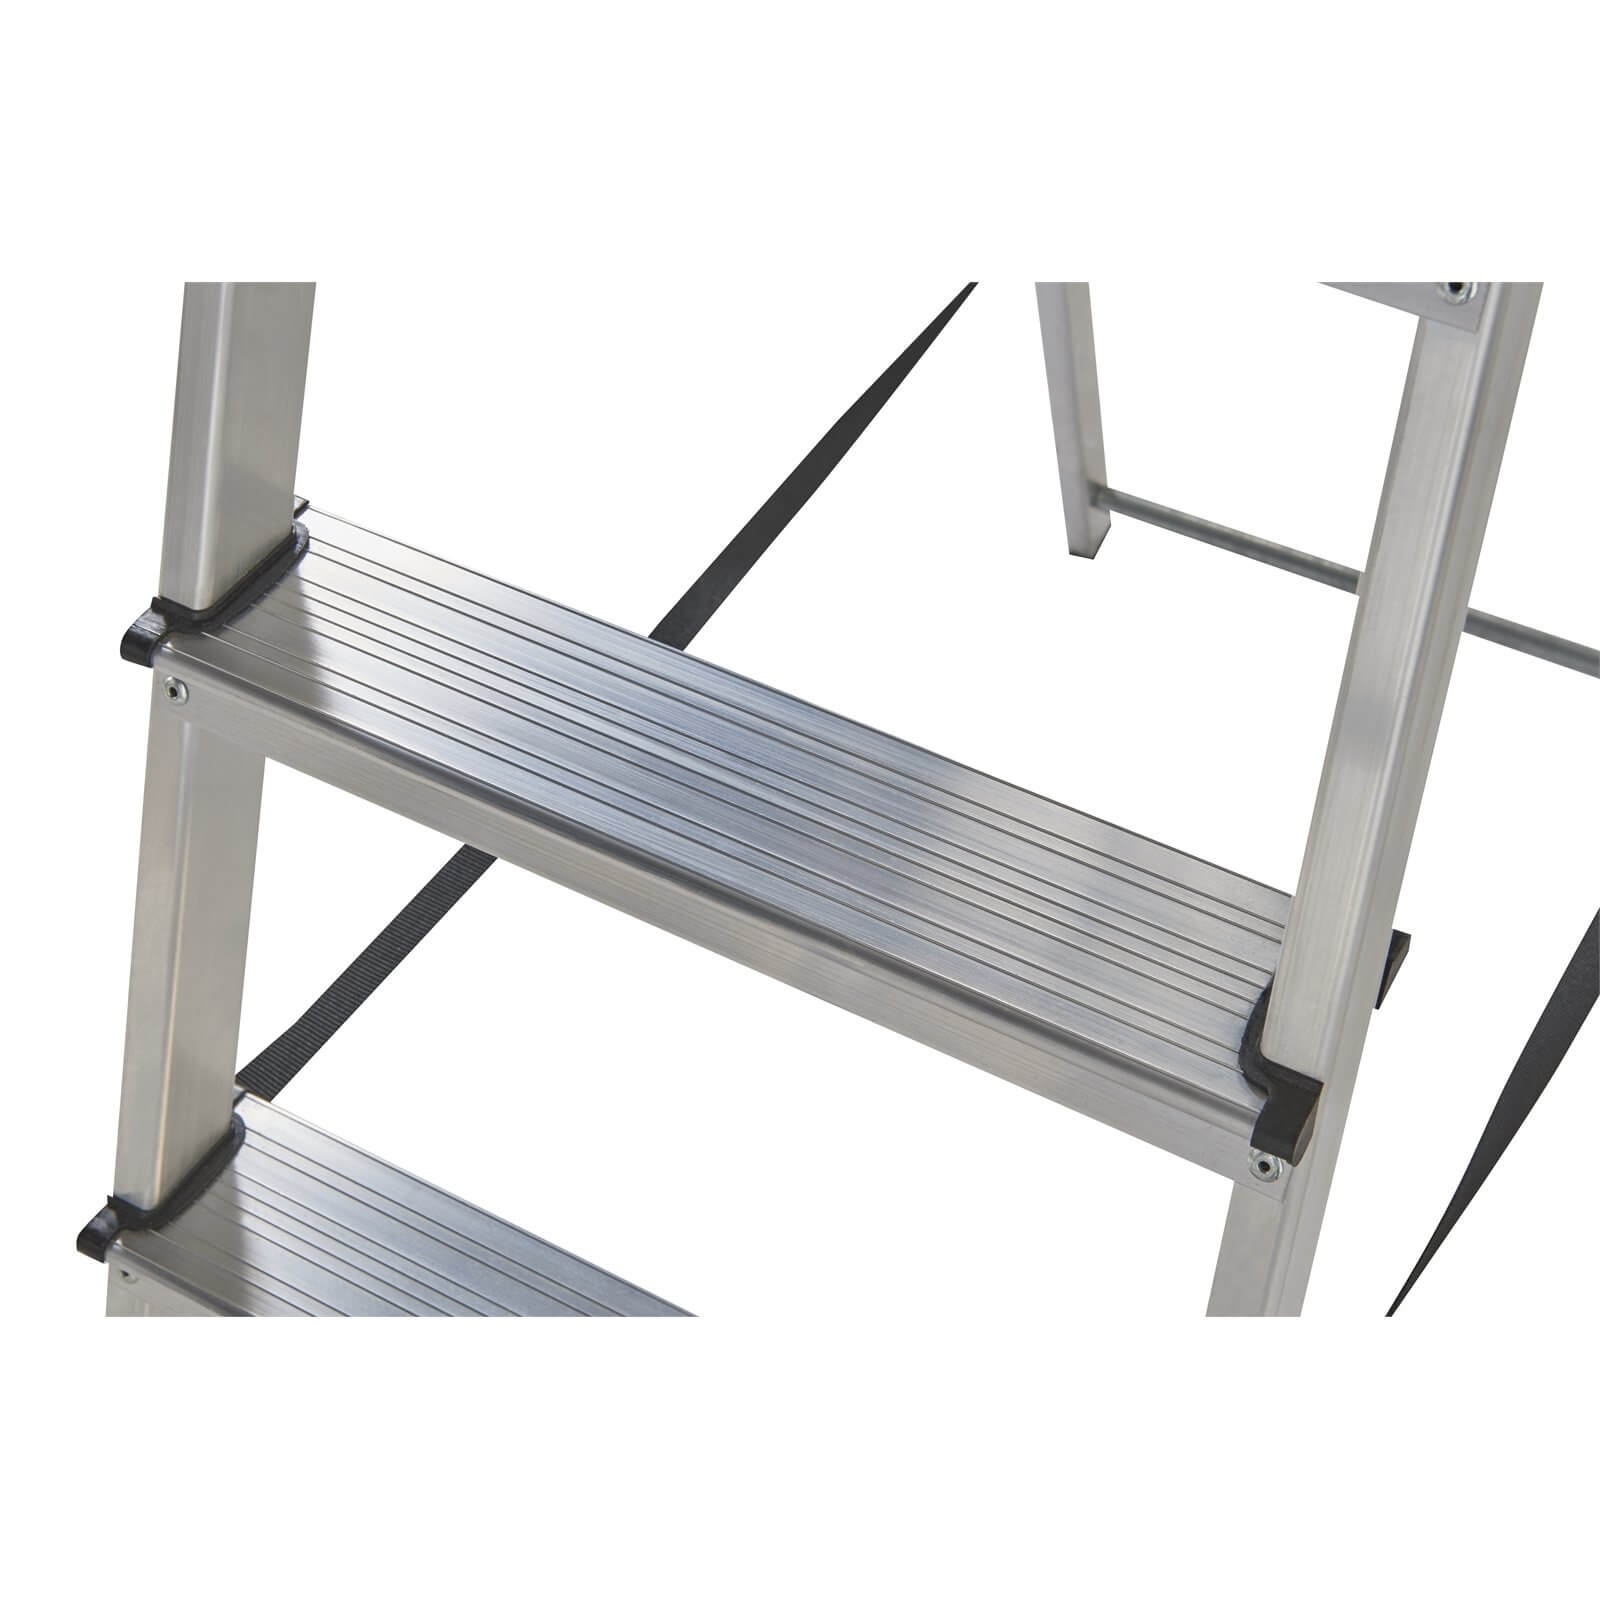 Werner High Handrail Step Ladder - 6 Tread